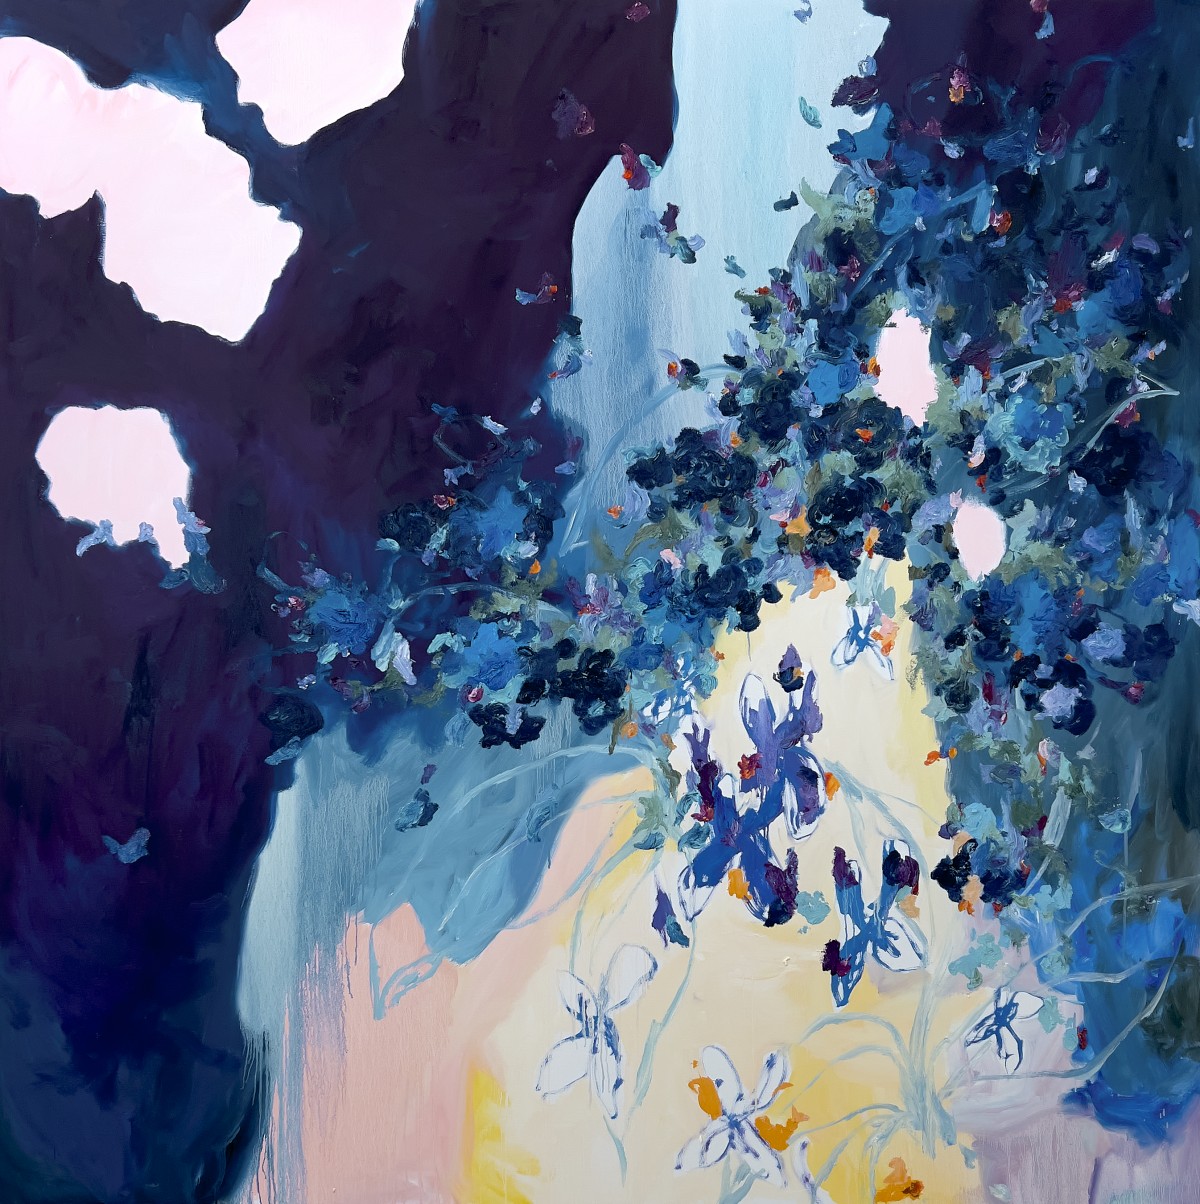 Cynoglossum, a Wildflower Fields painting by Arne Quinze